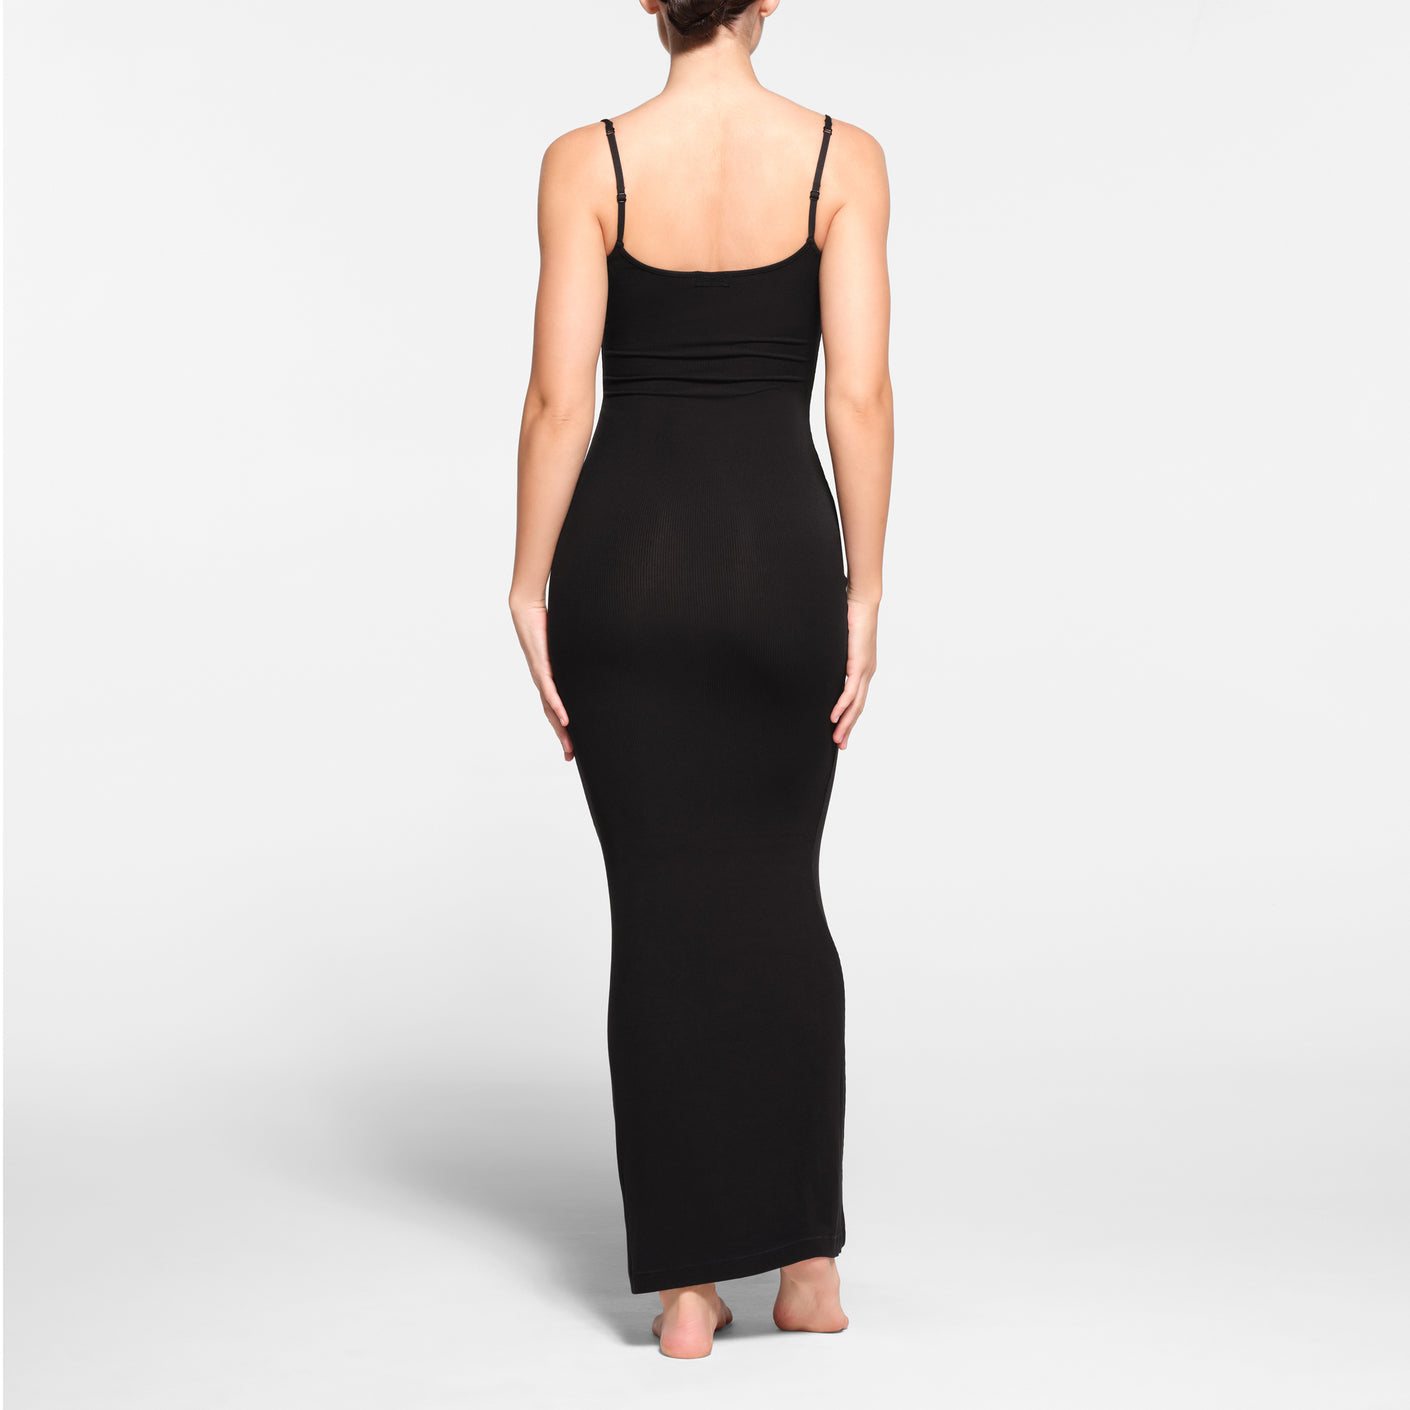 NWT- Skims Soft Lounge Long Sleeve Dress Onyx / Size S /(AP-DRS-1701)